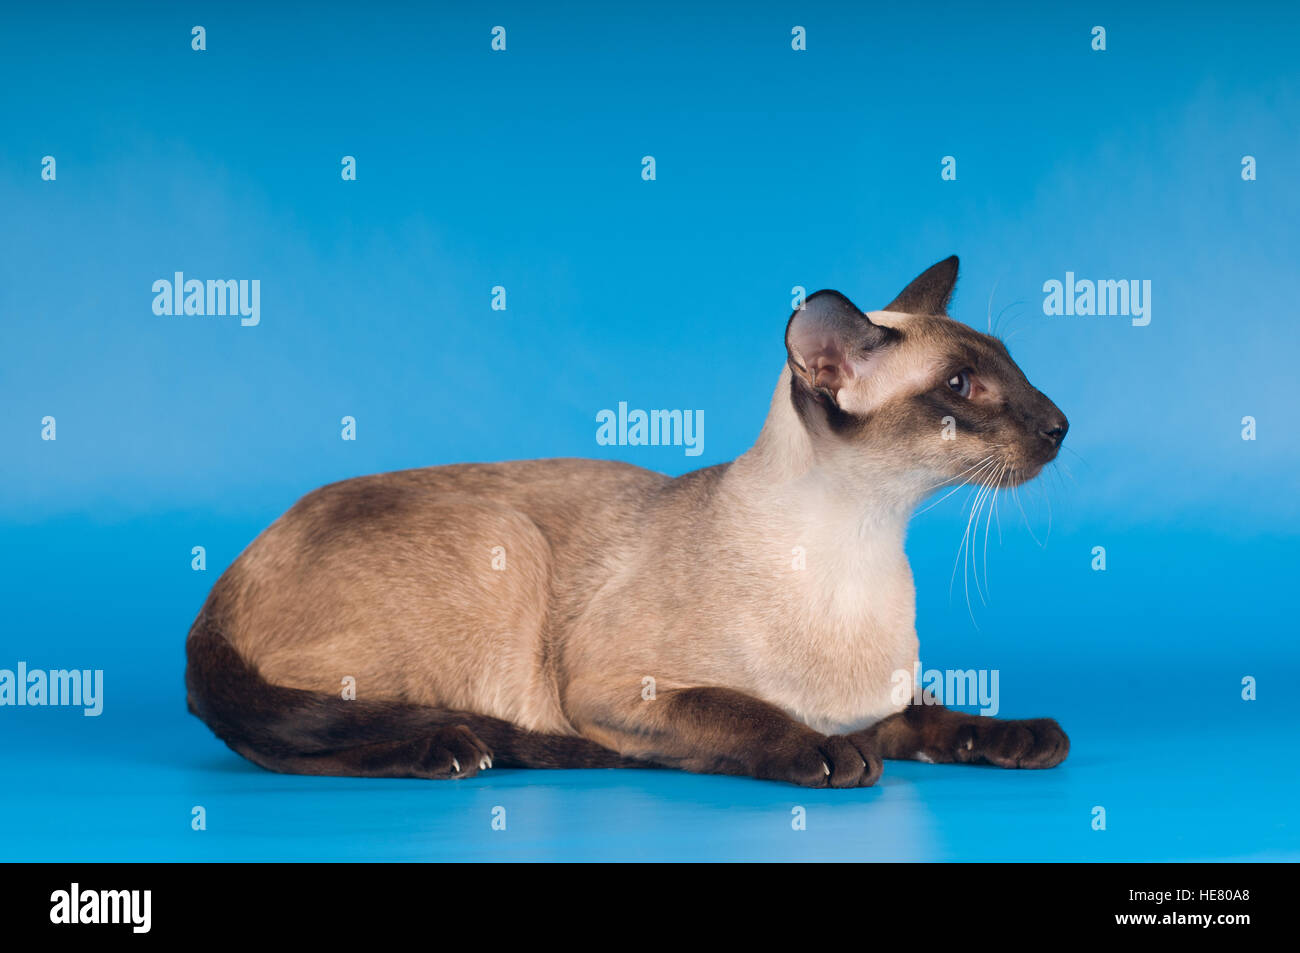 Siam cat on blue Stock Photo